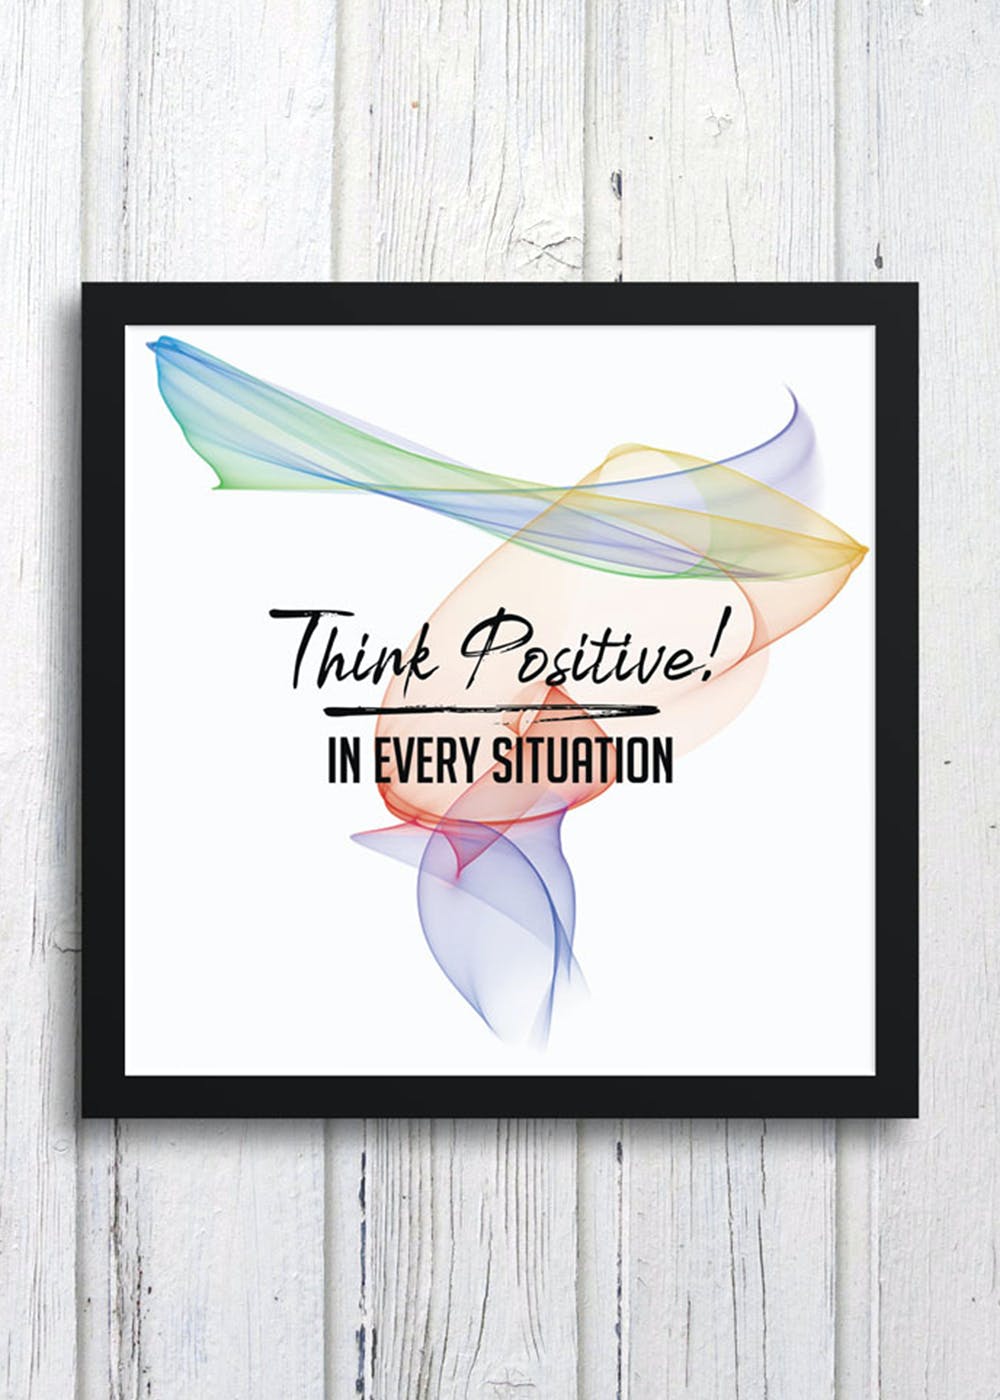 80900 Positive Thinking Illustrations RoyaltyFree Vector Graphics   Clip Art  iStock  Positive Business optimism Optimism concept